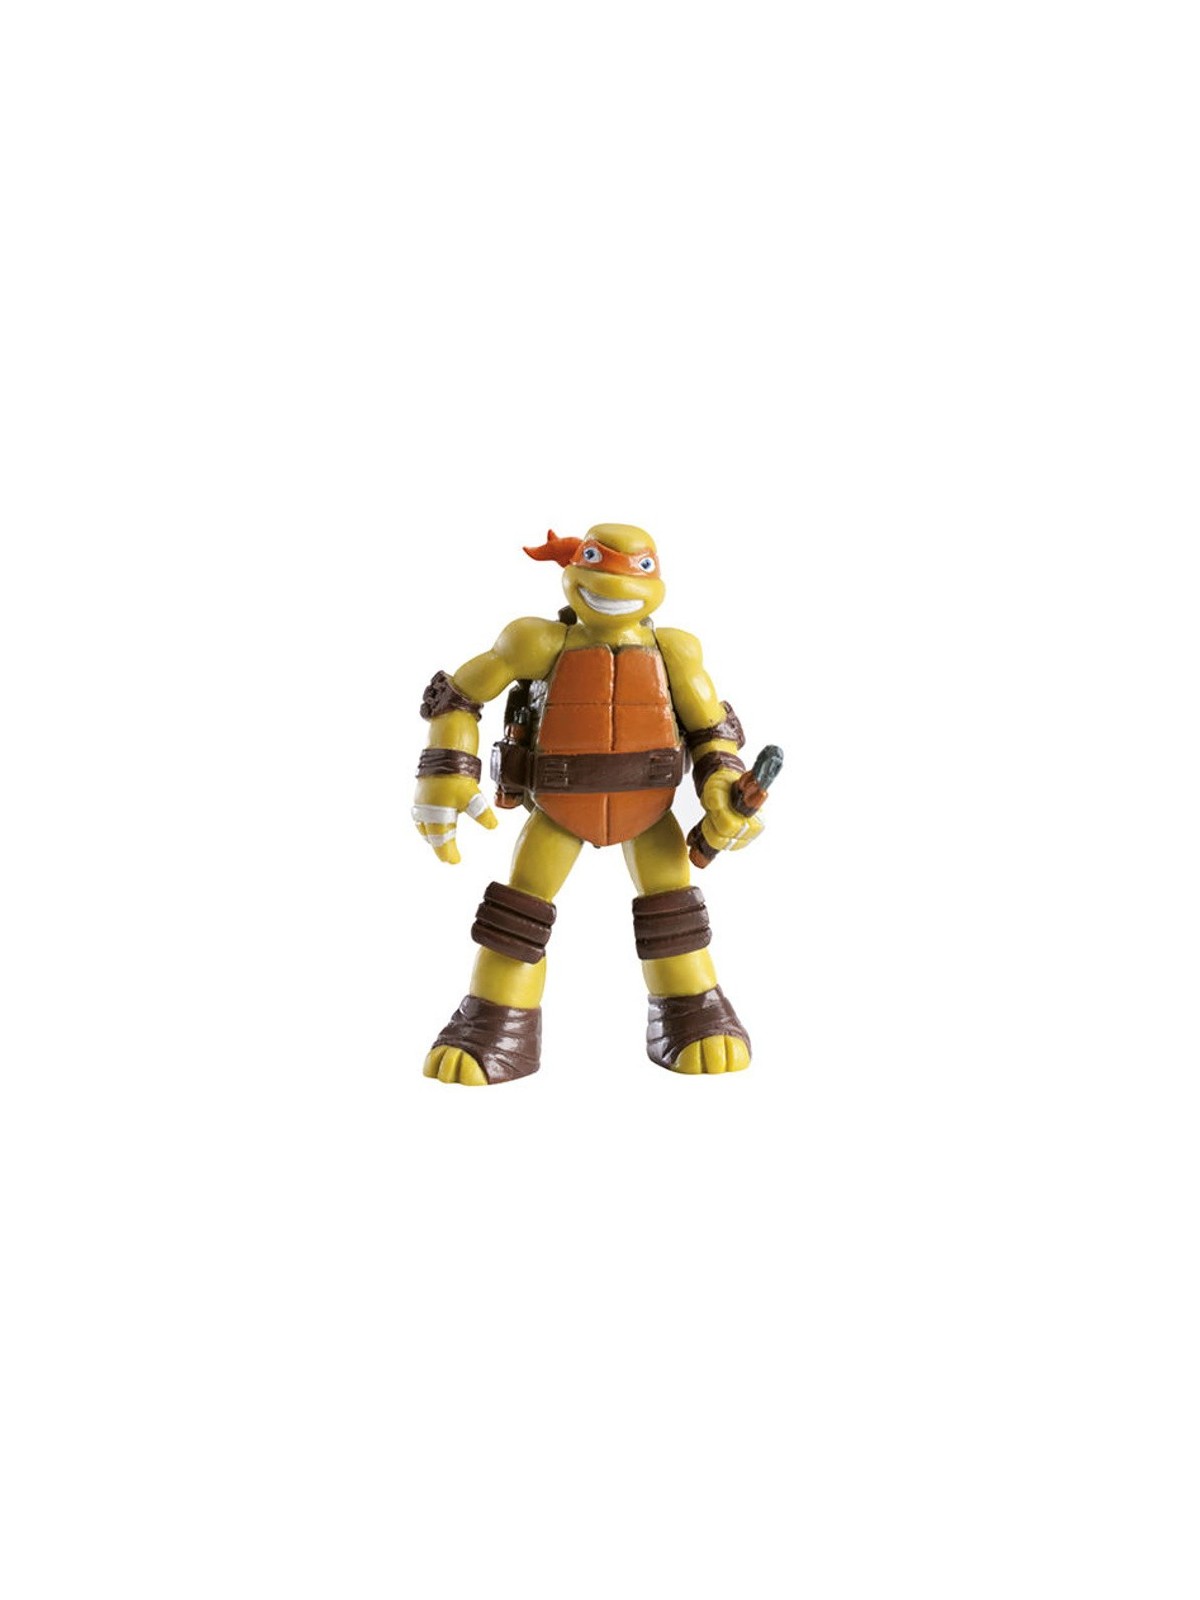 Dekora - Dekorative Figur -  Ninja Turtles - Michelangelo - orange